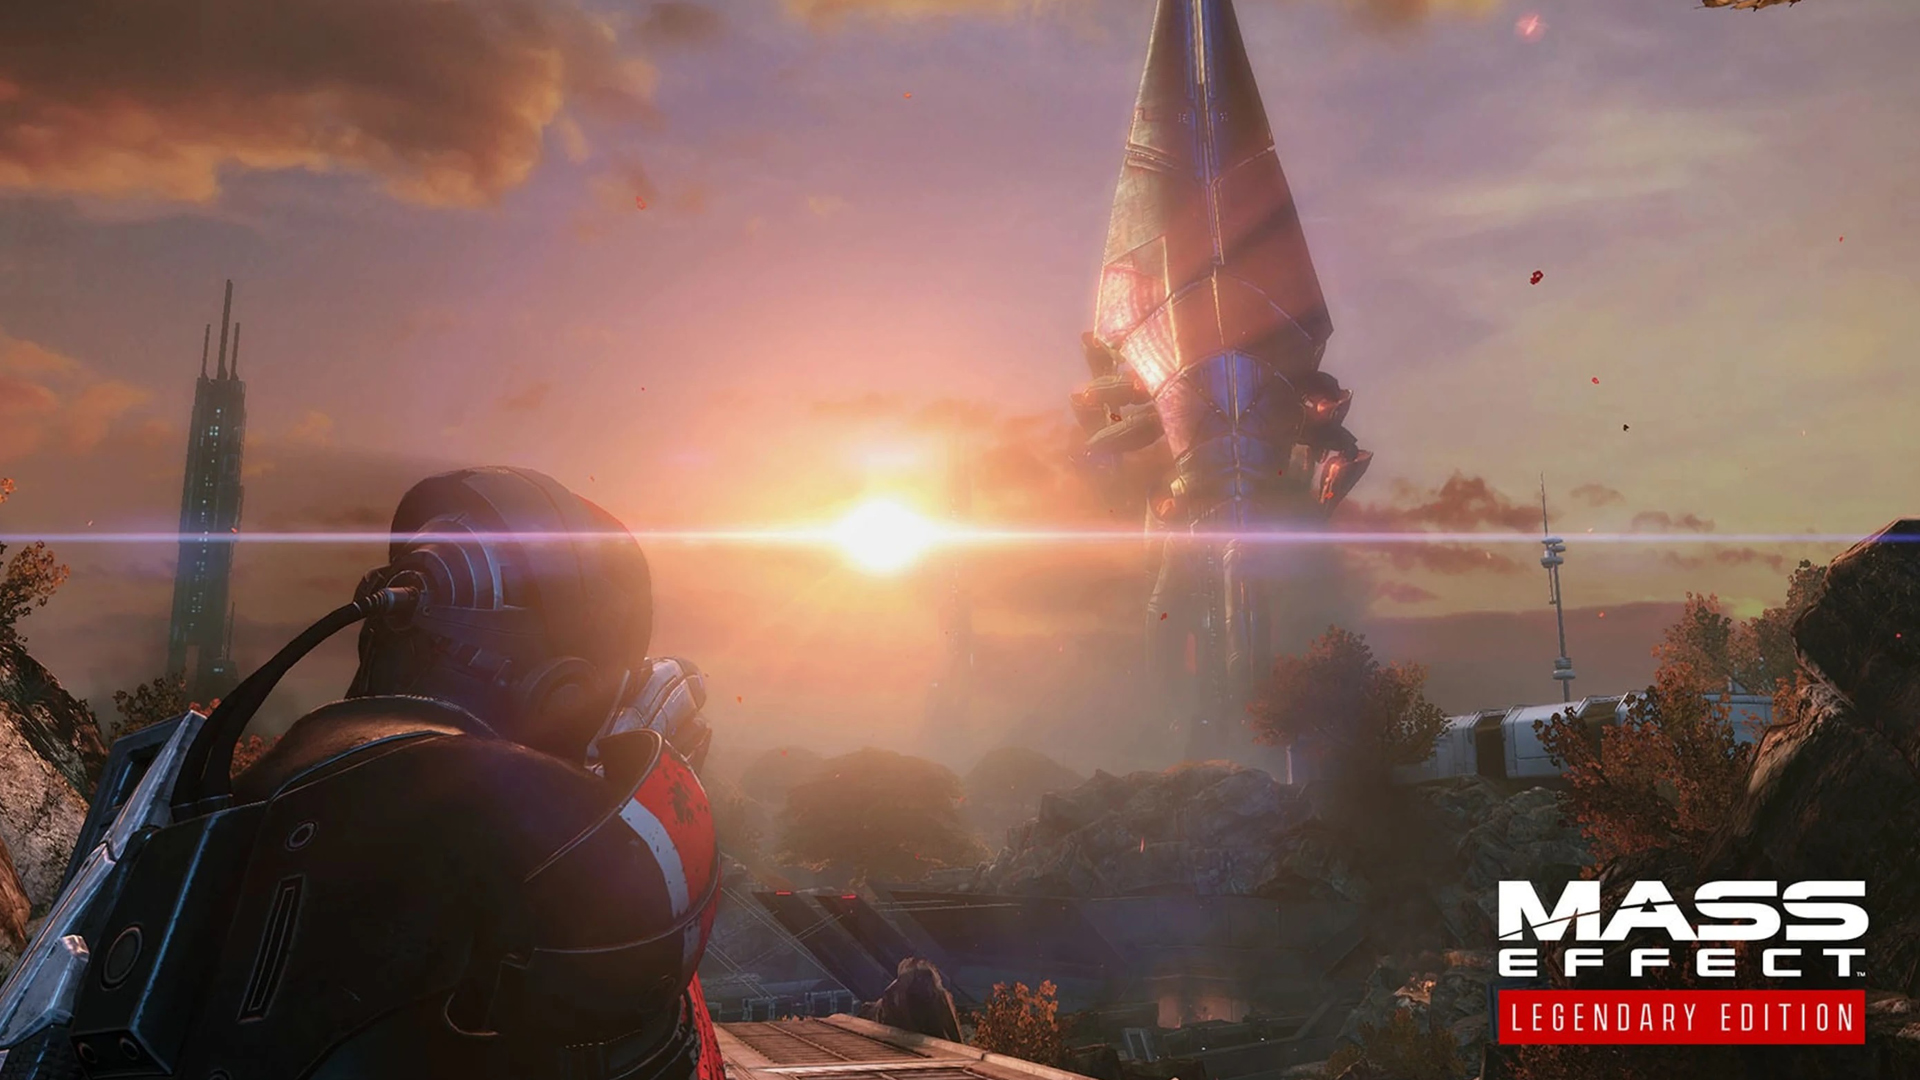 Le doublage d'Alexandre Astier dans Mass Effect Andromeda